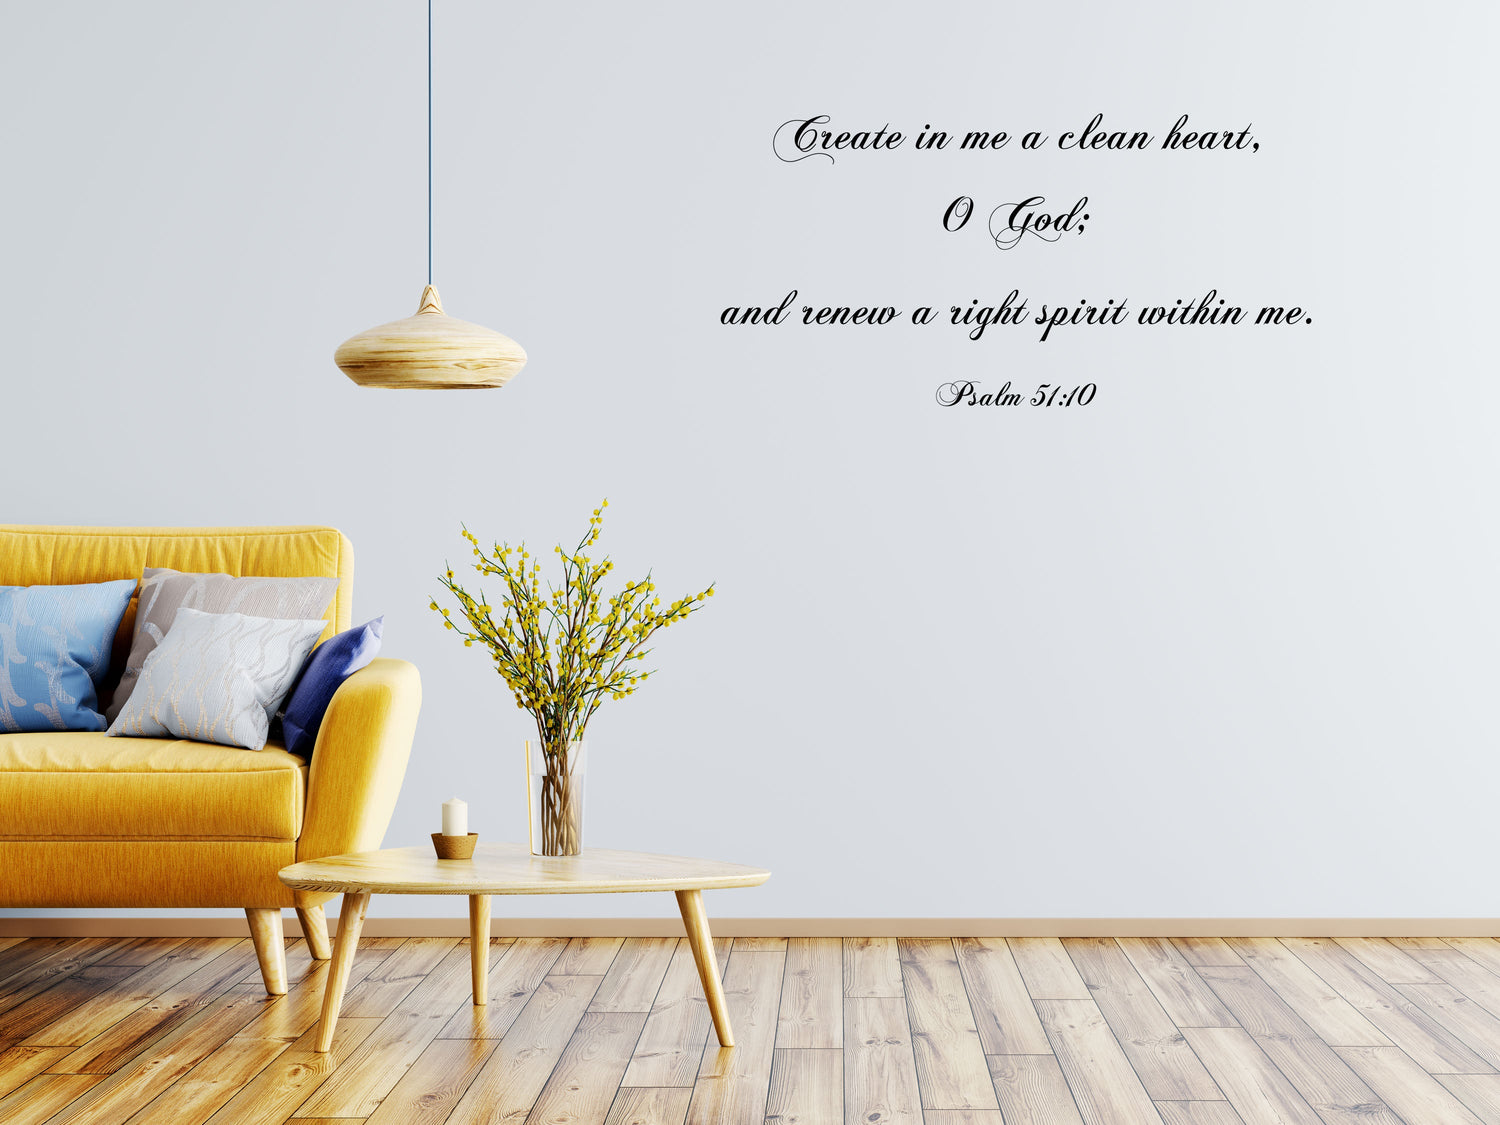 Psalm 51:10 - Scripture Wall Decals - Christian Bible Verse Decals Vinyl Wall Decal Inspirational Wall Signs 